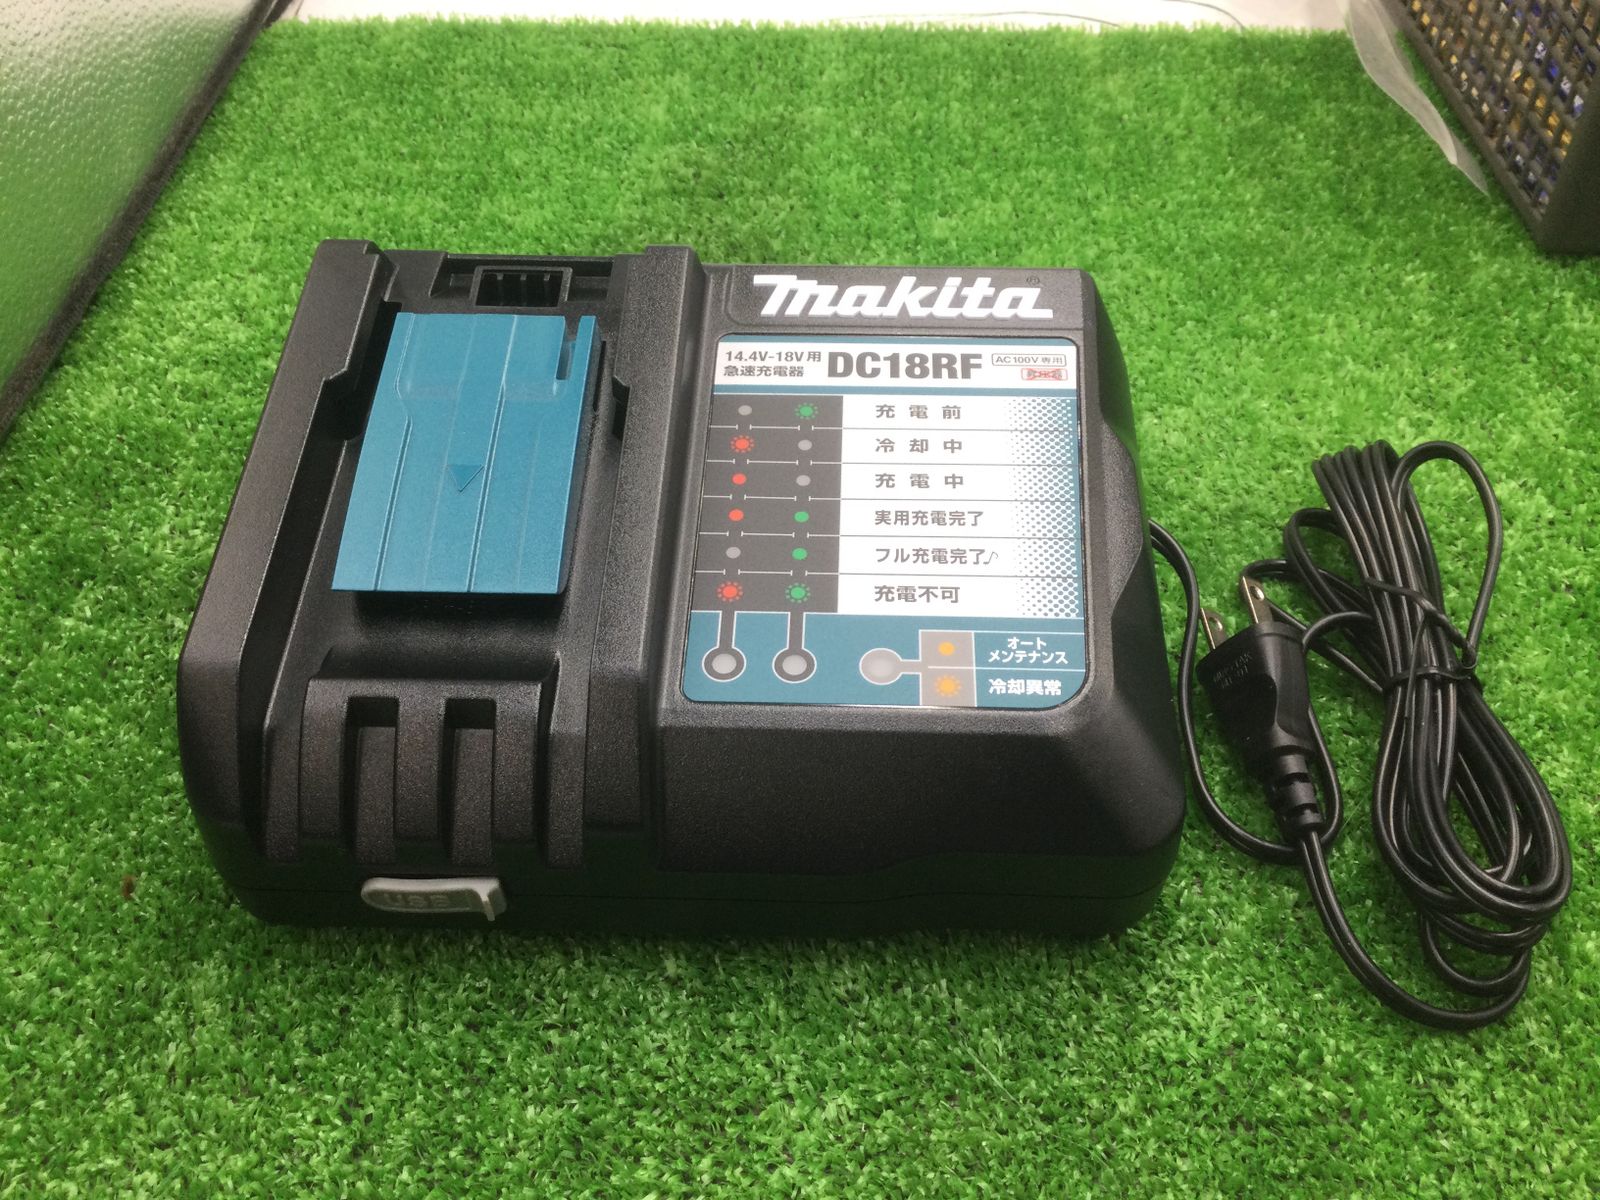 ☆Makita/マキタ 14.4v/18v リチウムイオンバッテリ用急速充電器 DC18RF [ITFBYGL96PQ1] - メルカリ